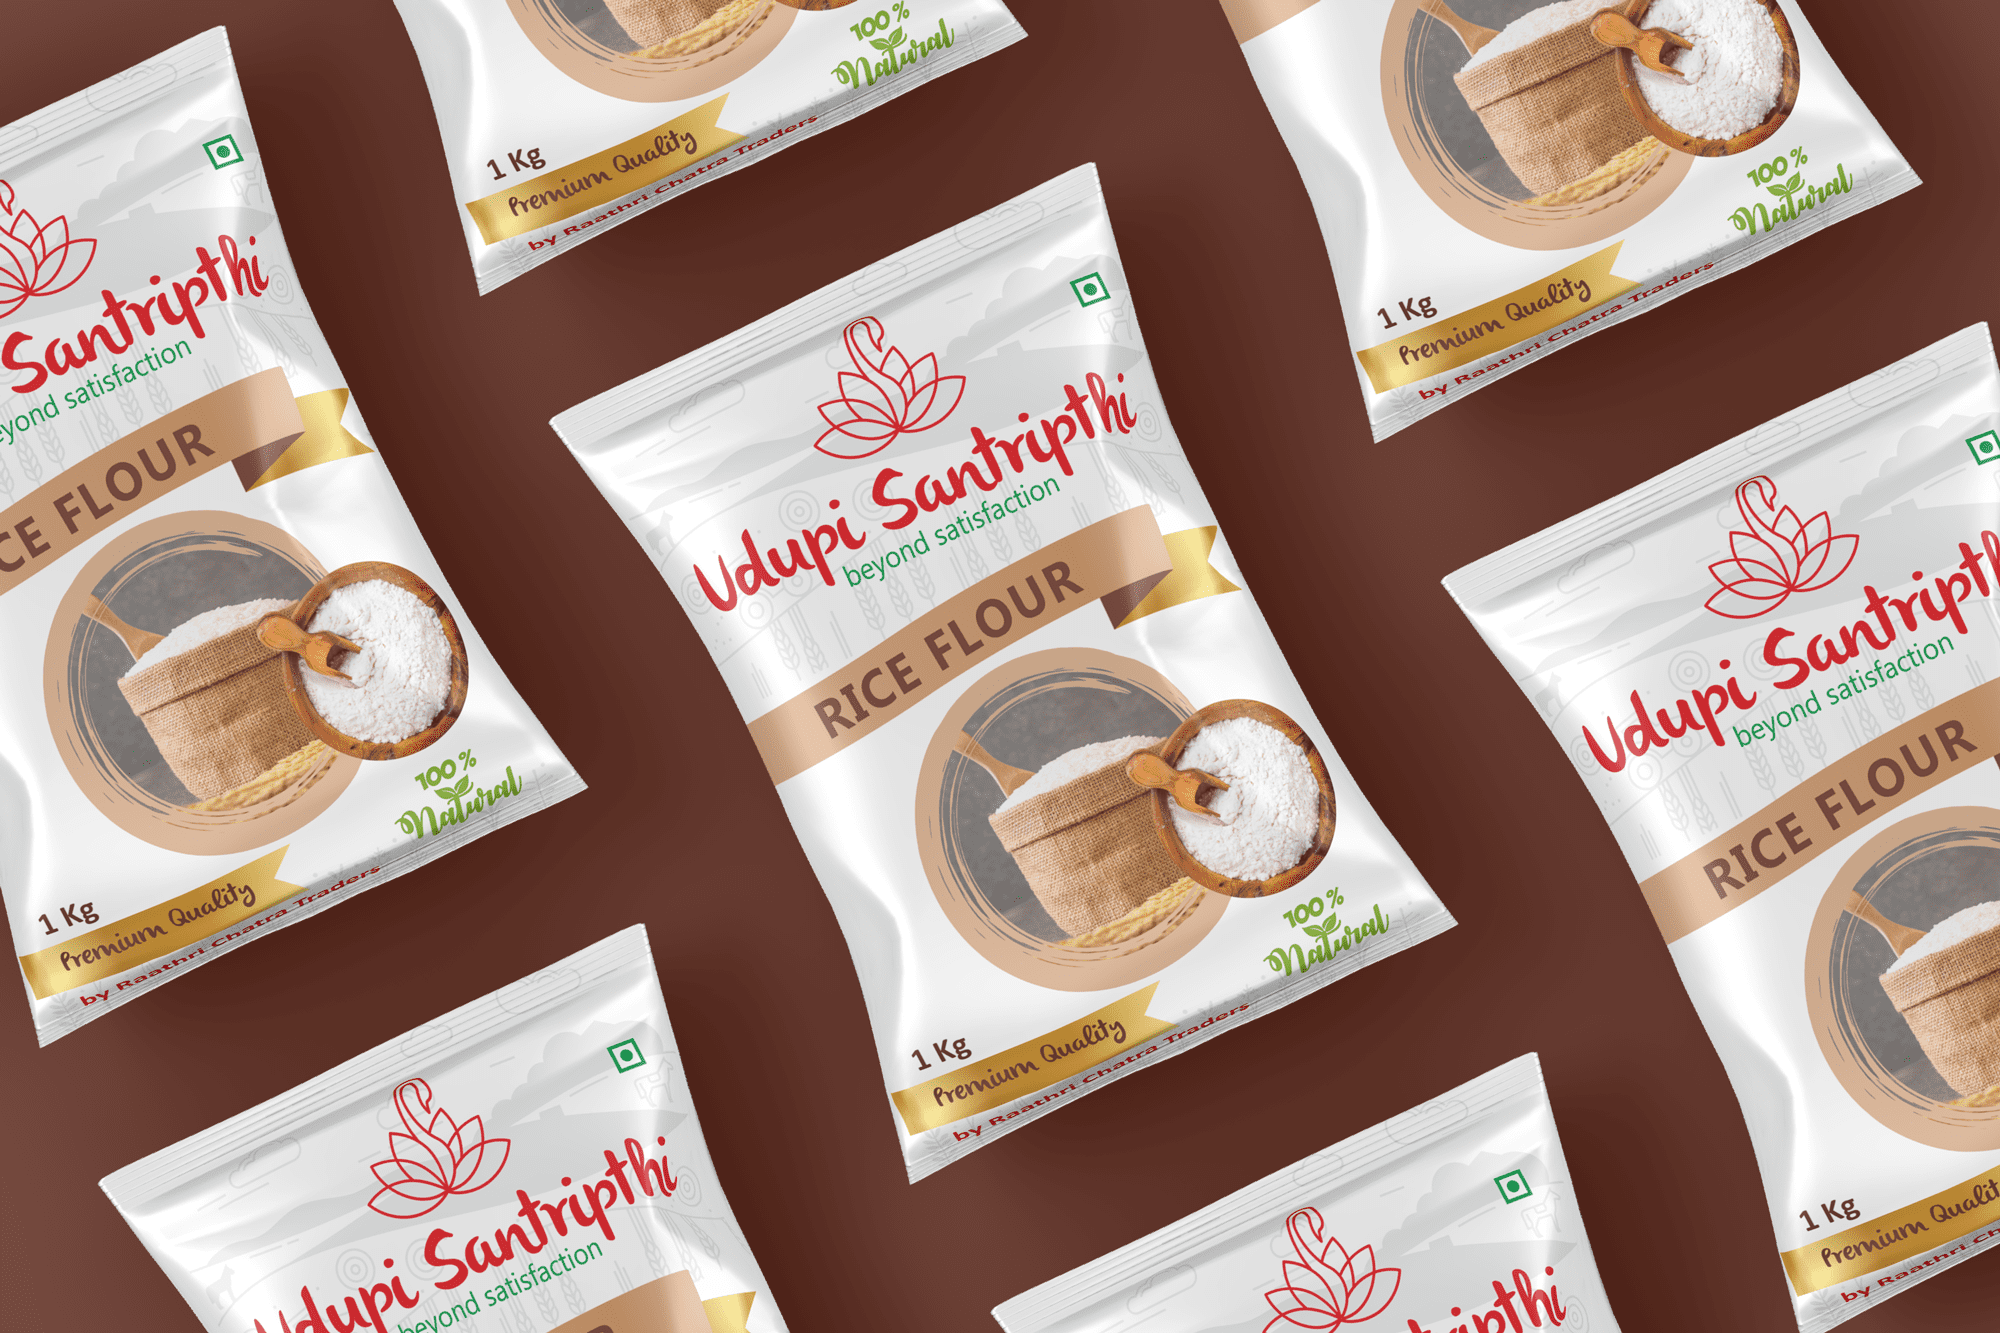 Udupi Santripthi Brand Rice Flour Branding Packaging Design Digital Marketing in Coimbatore by Violet Spark